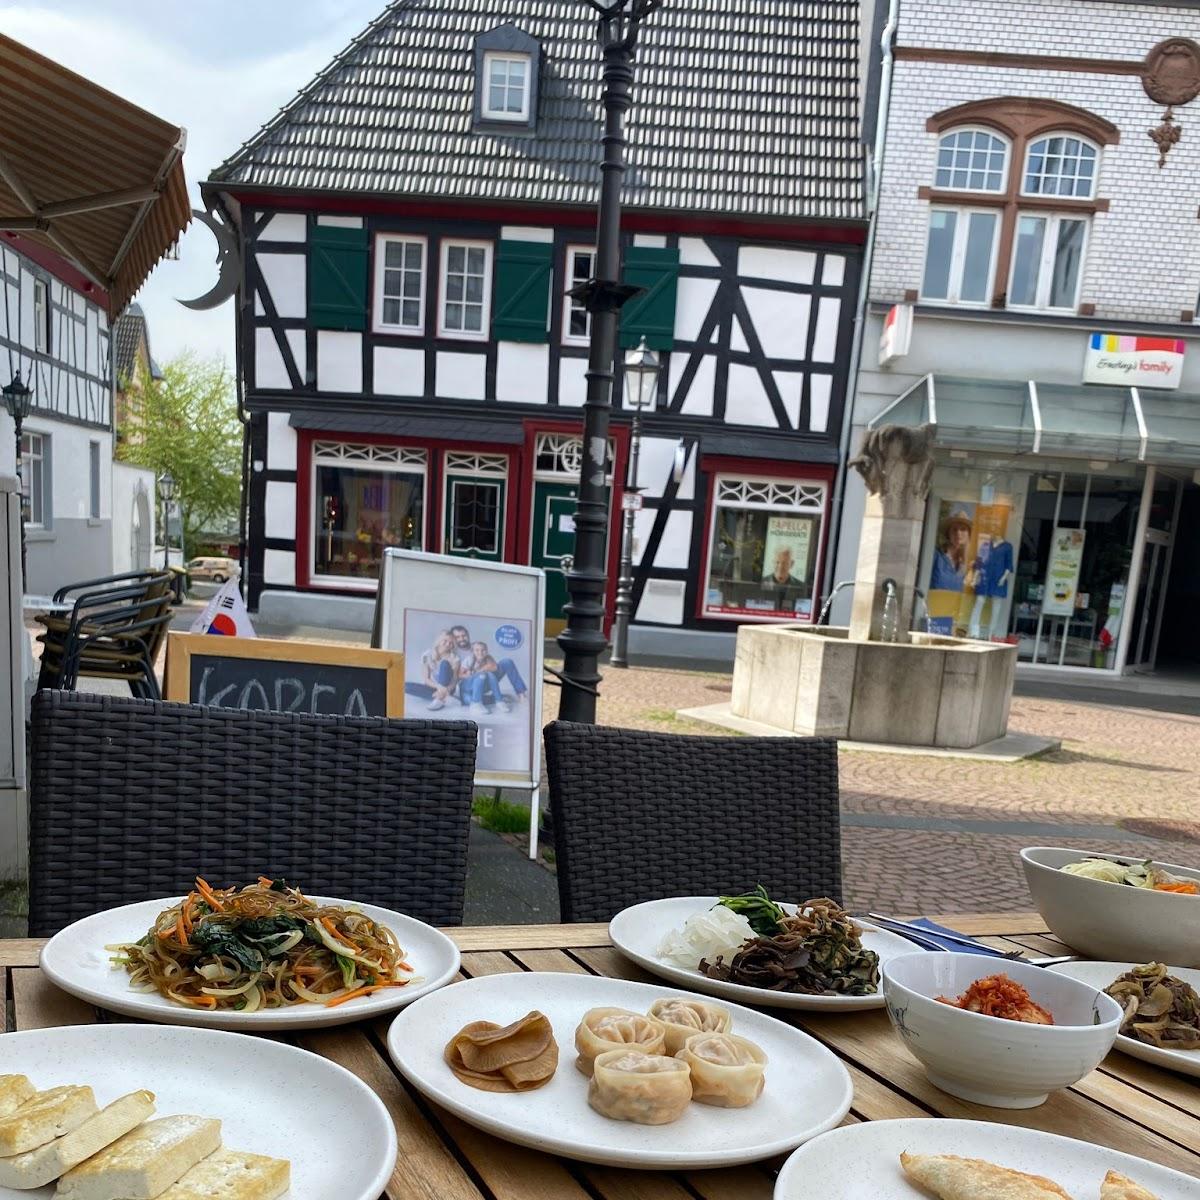 Restaurant "Frau Seo" in Bad Honnef